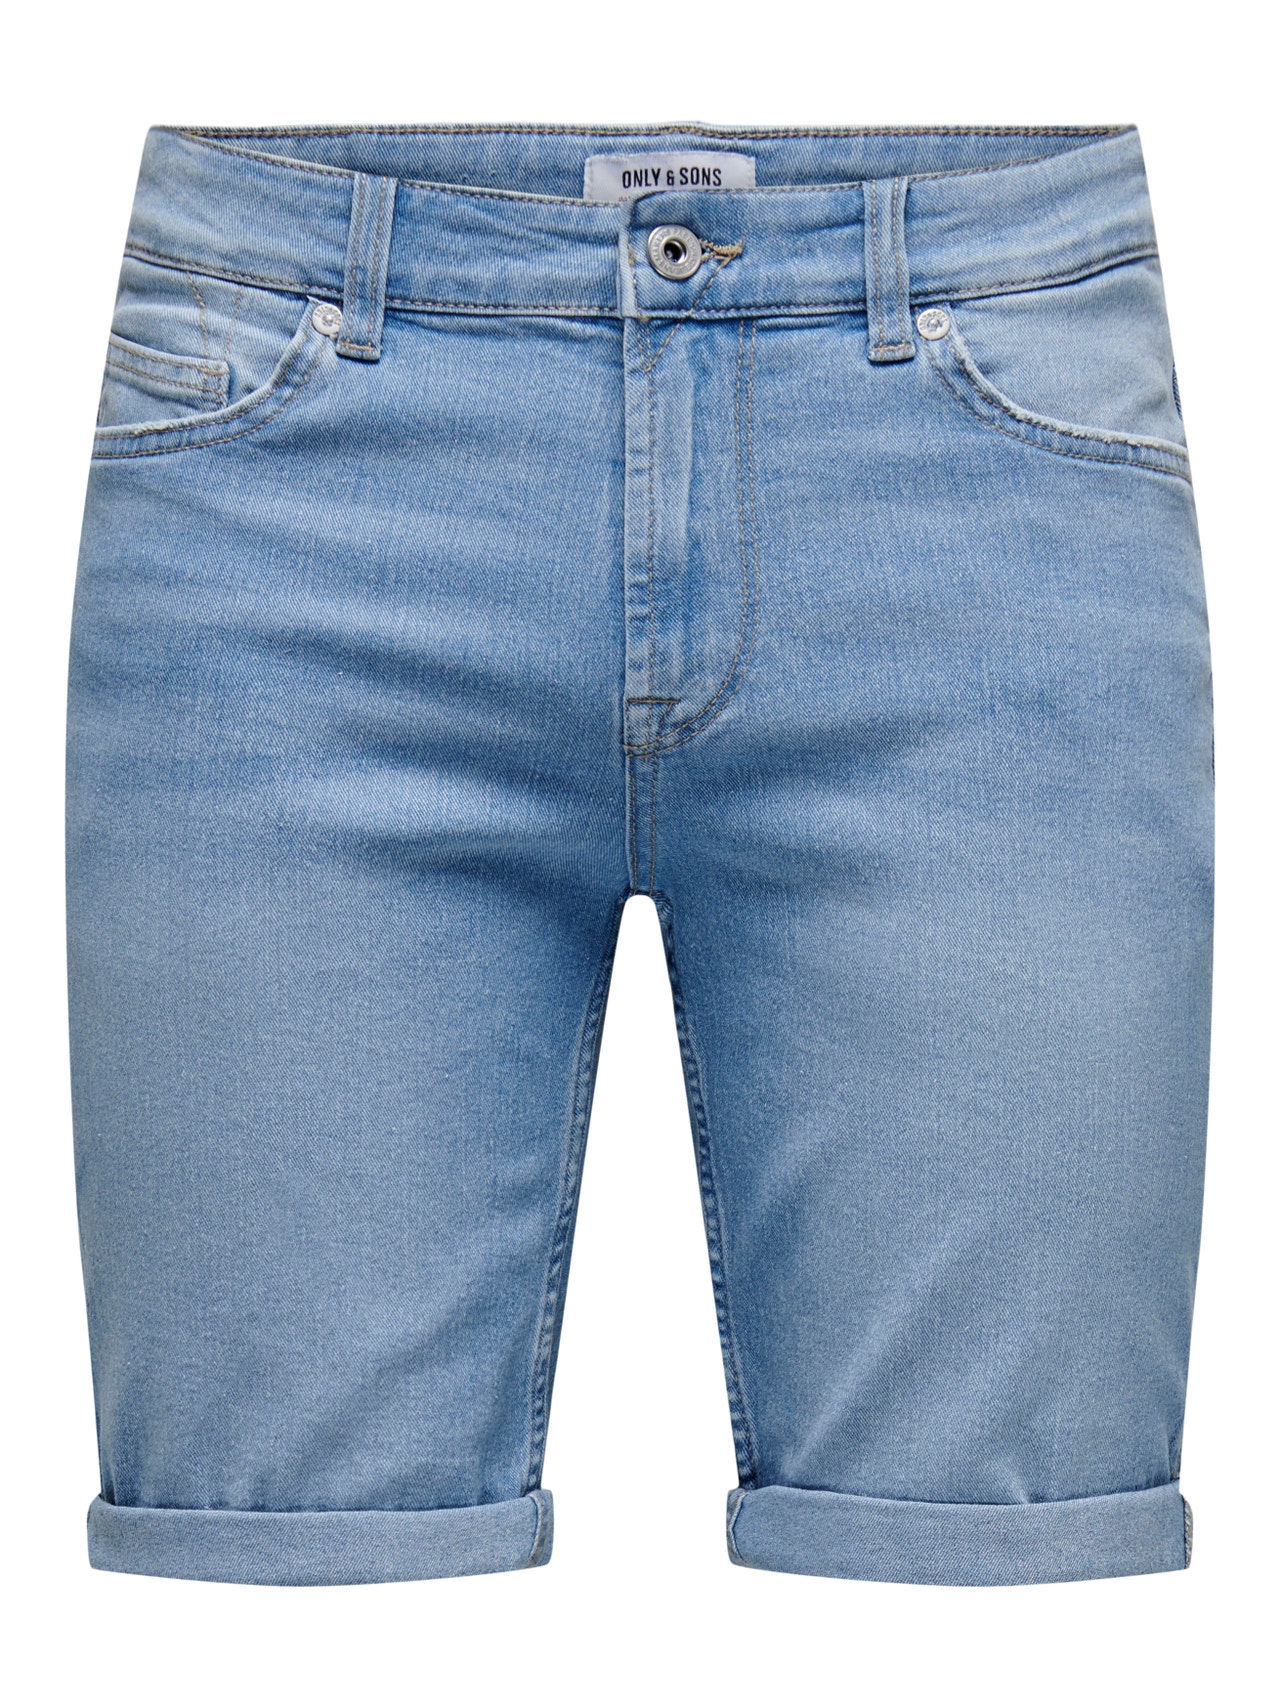 ONLY & SONS Regular Fit Shorts -Light Blue Denim - 22024330